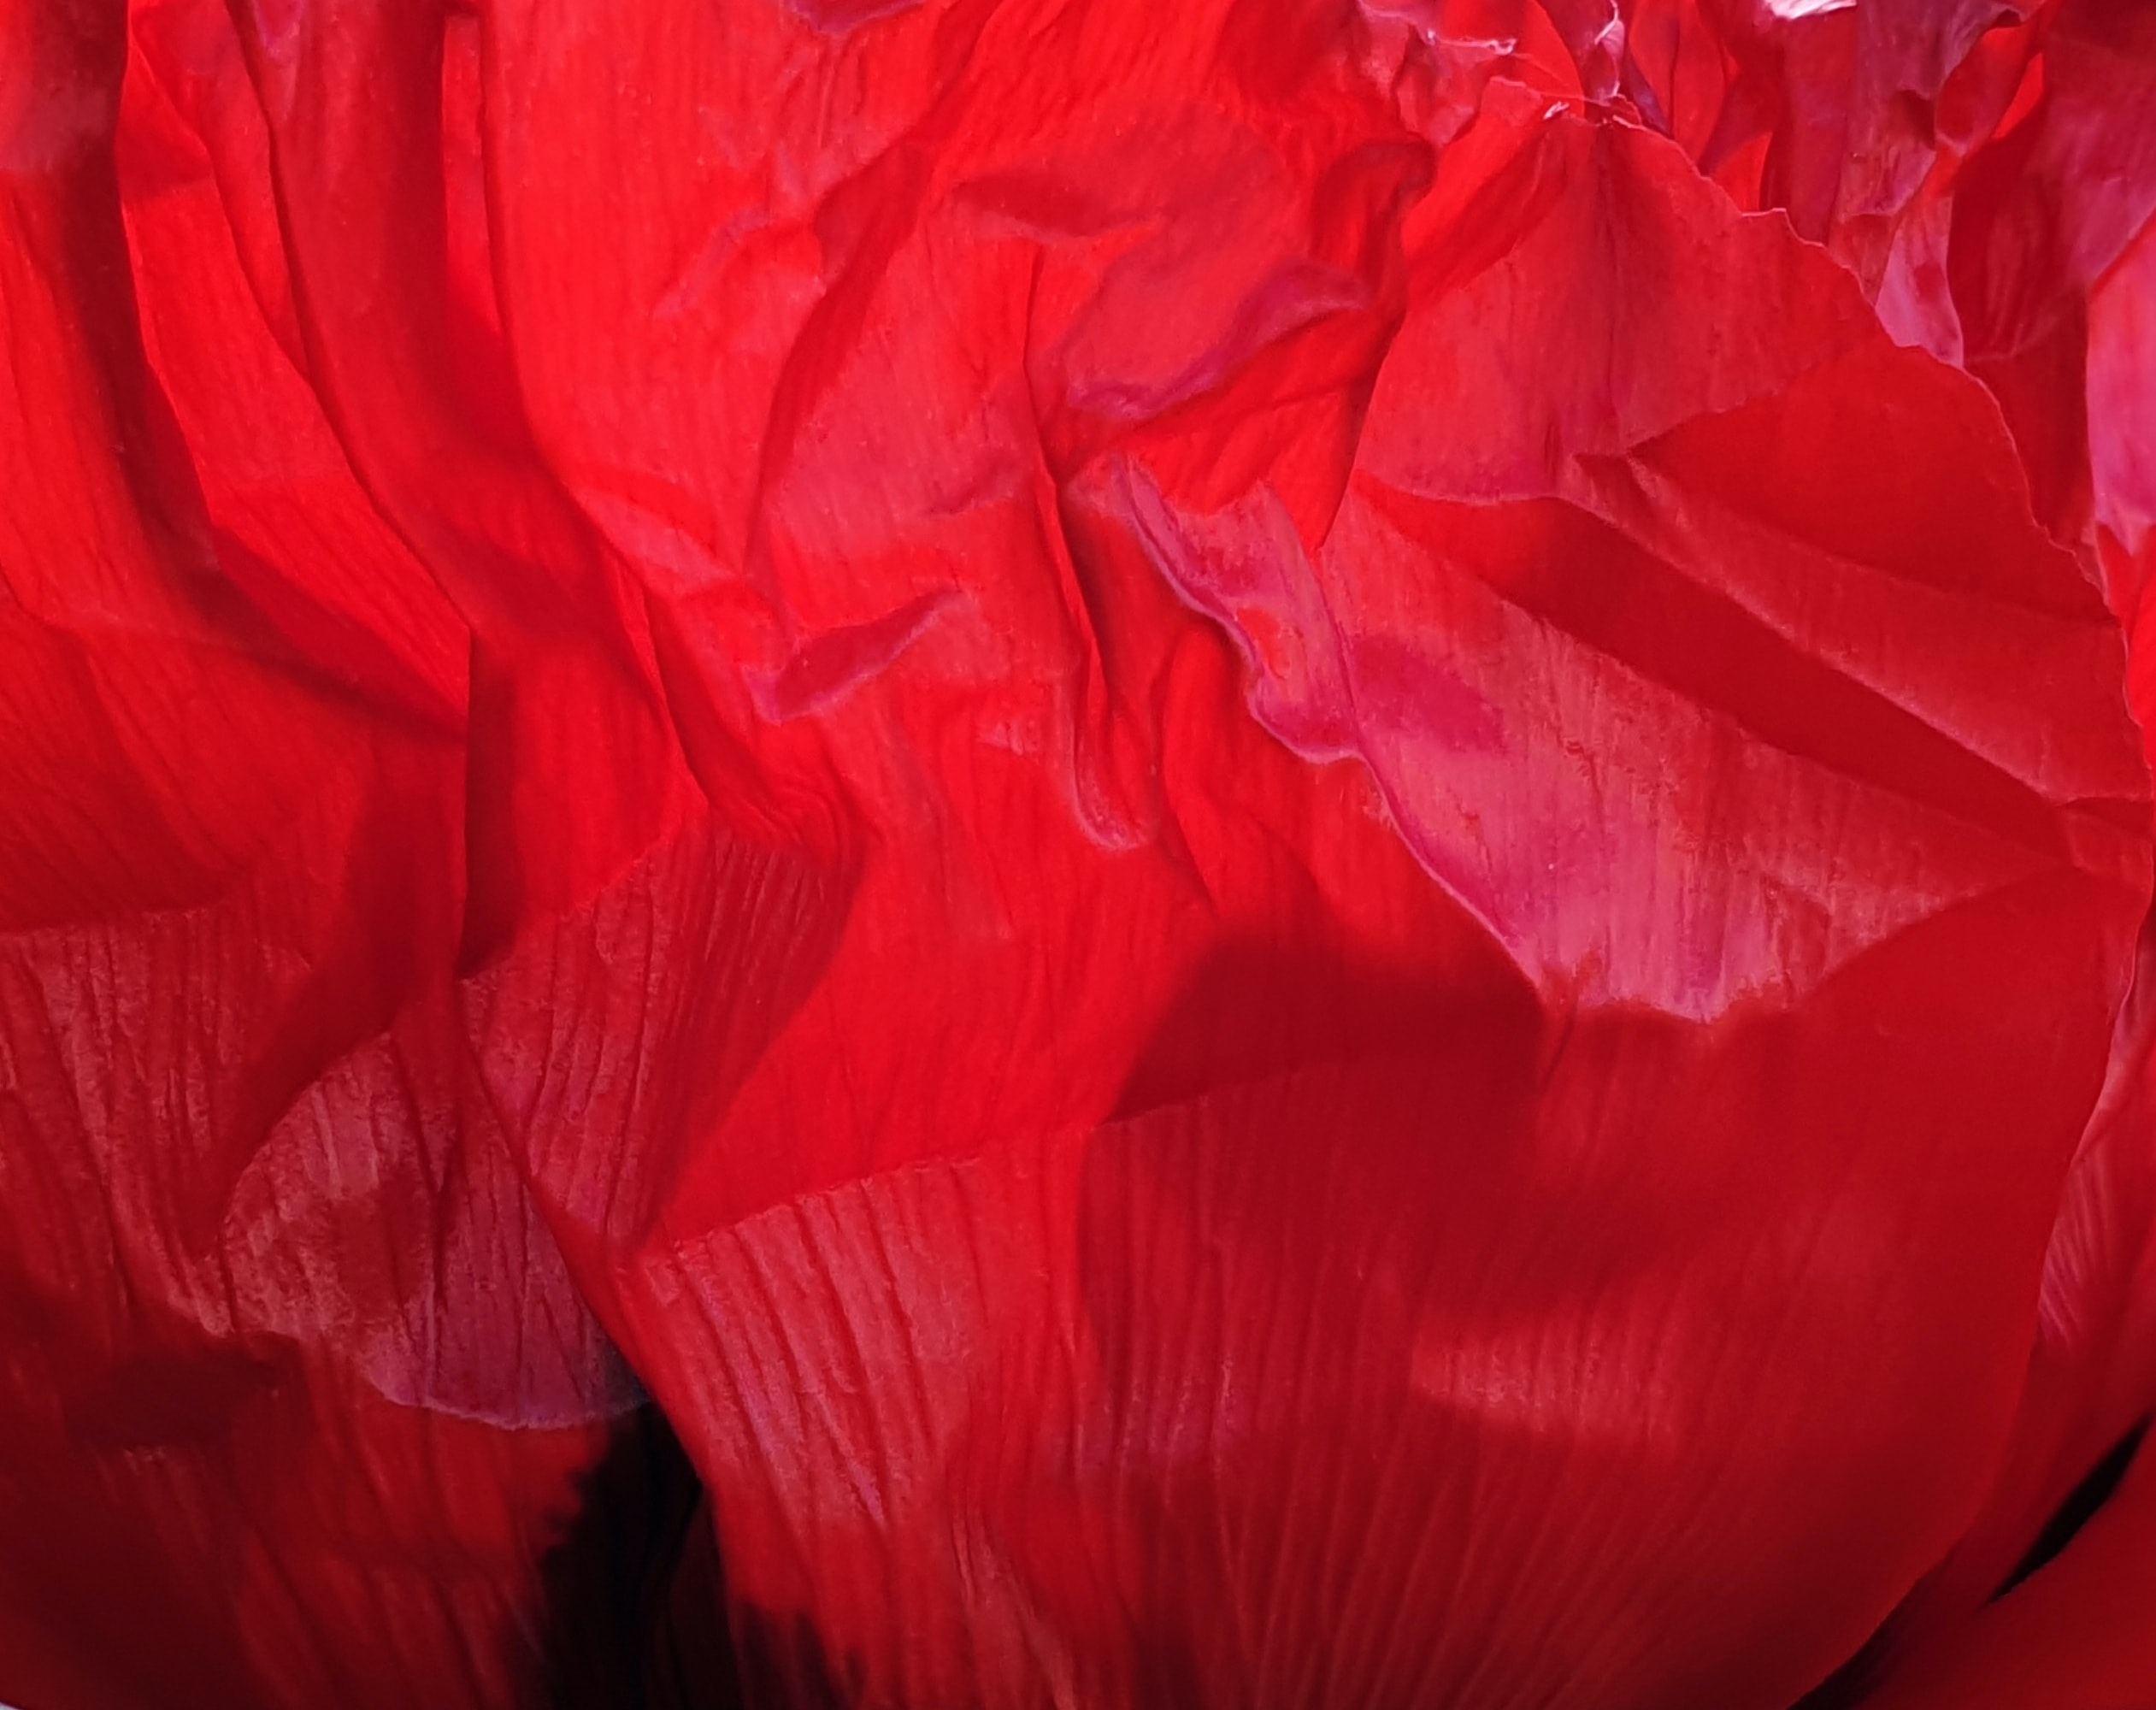 textures, red, flower, petals, texture, crumpled